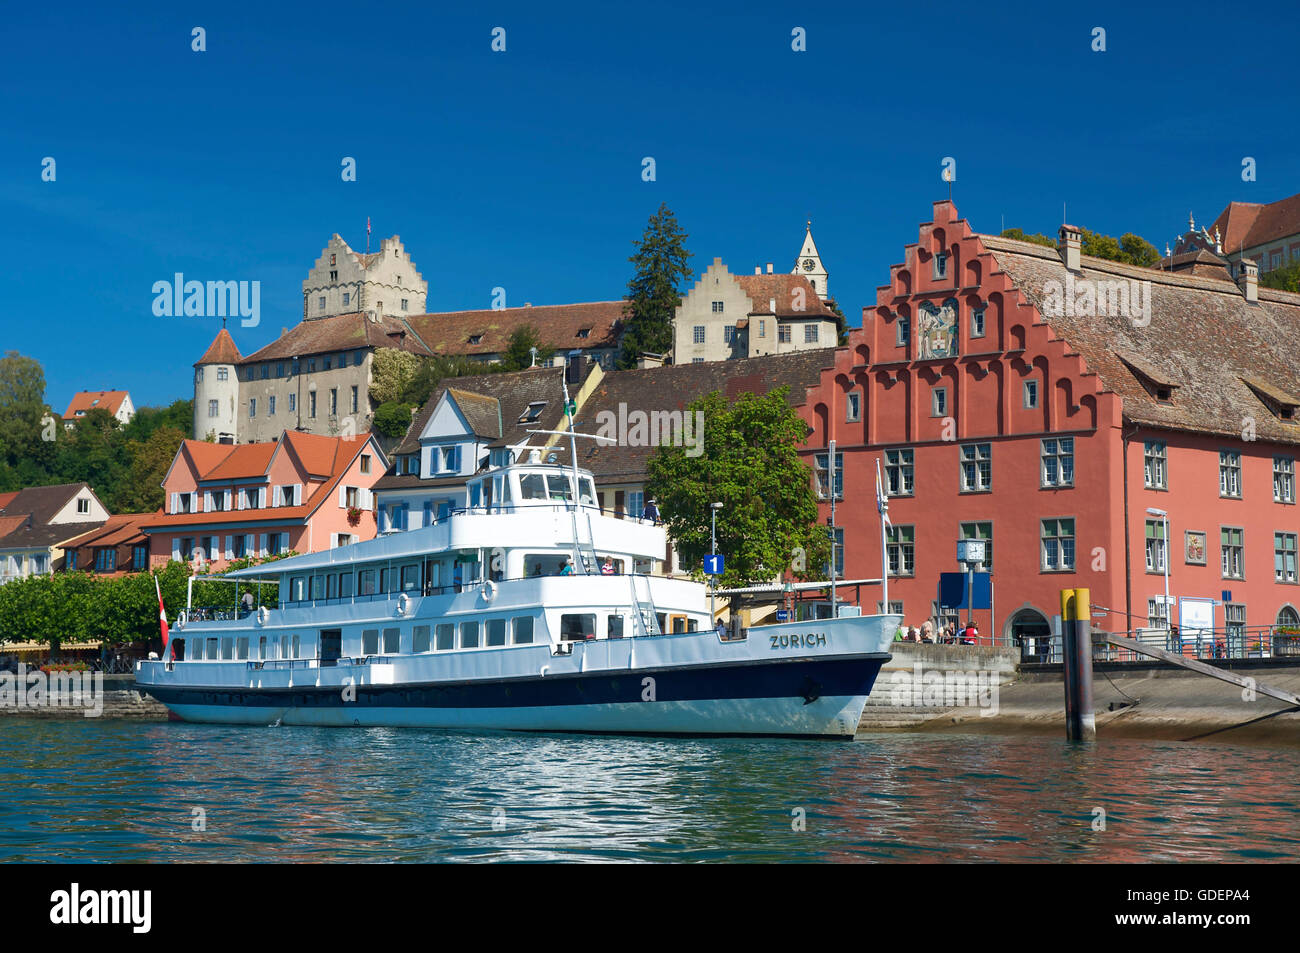 Meersburg, Lake Constance, Baden-Wuerttemberg, Germany Stock Photo